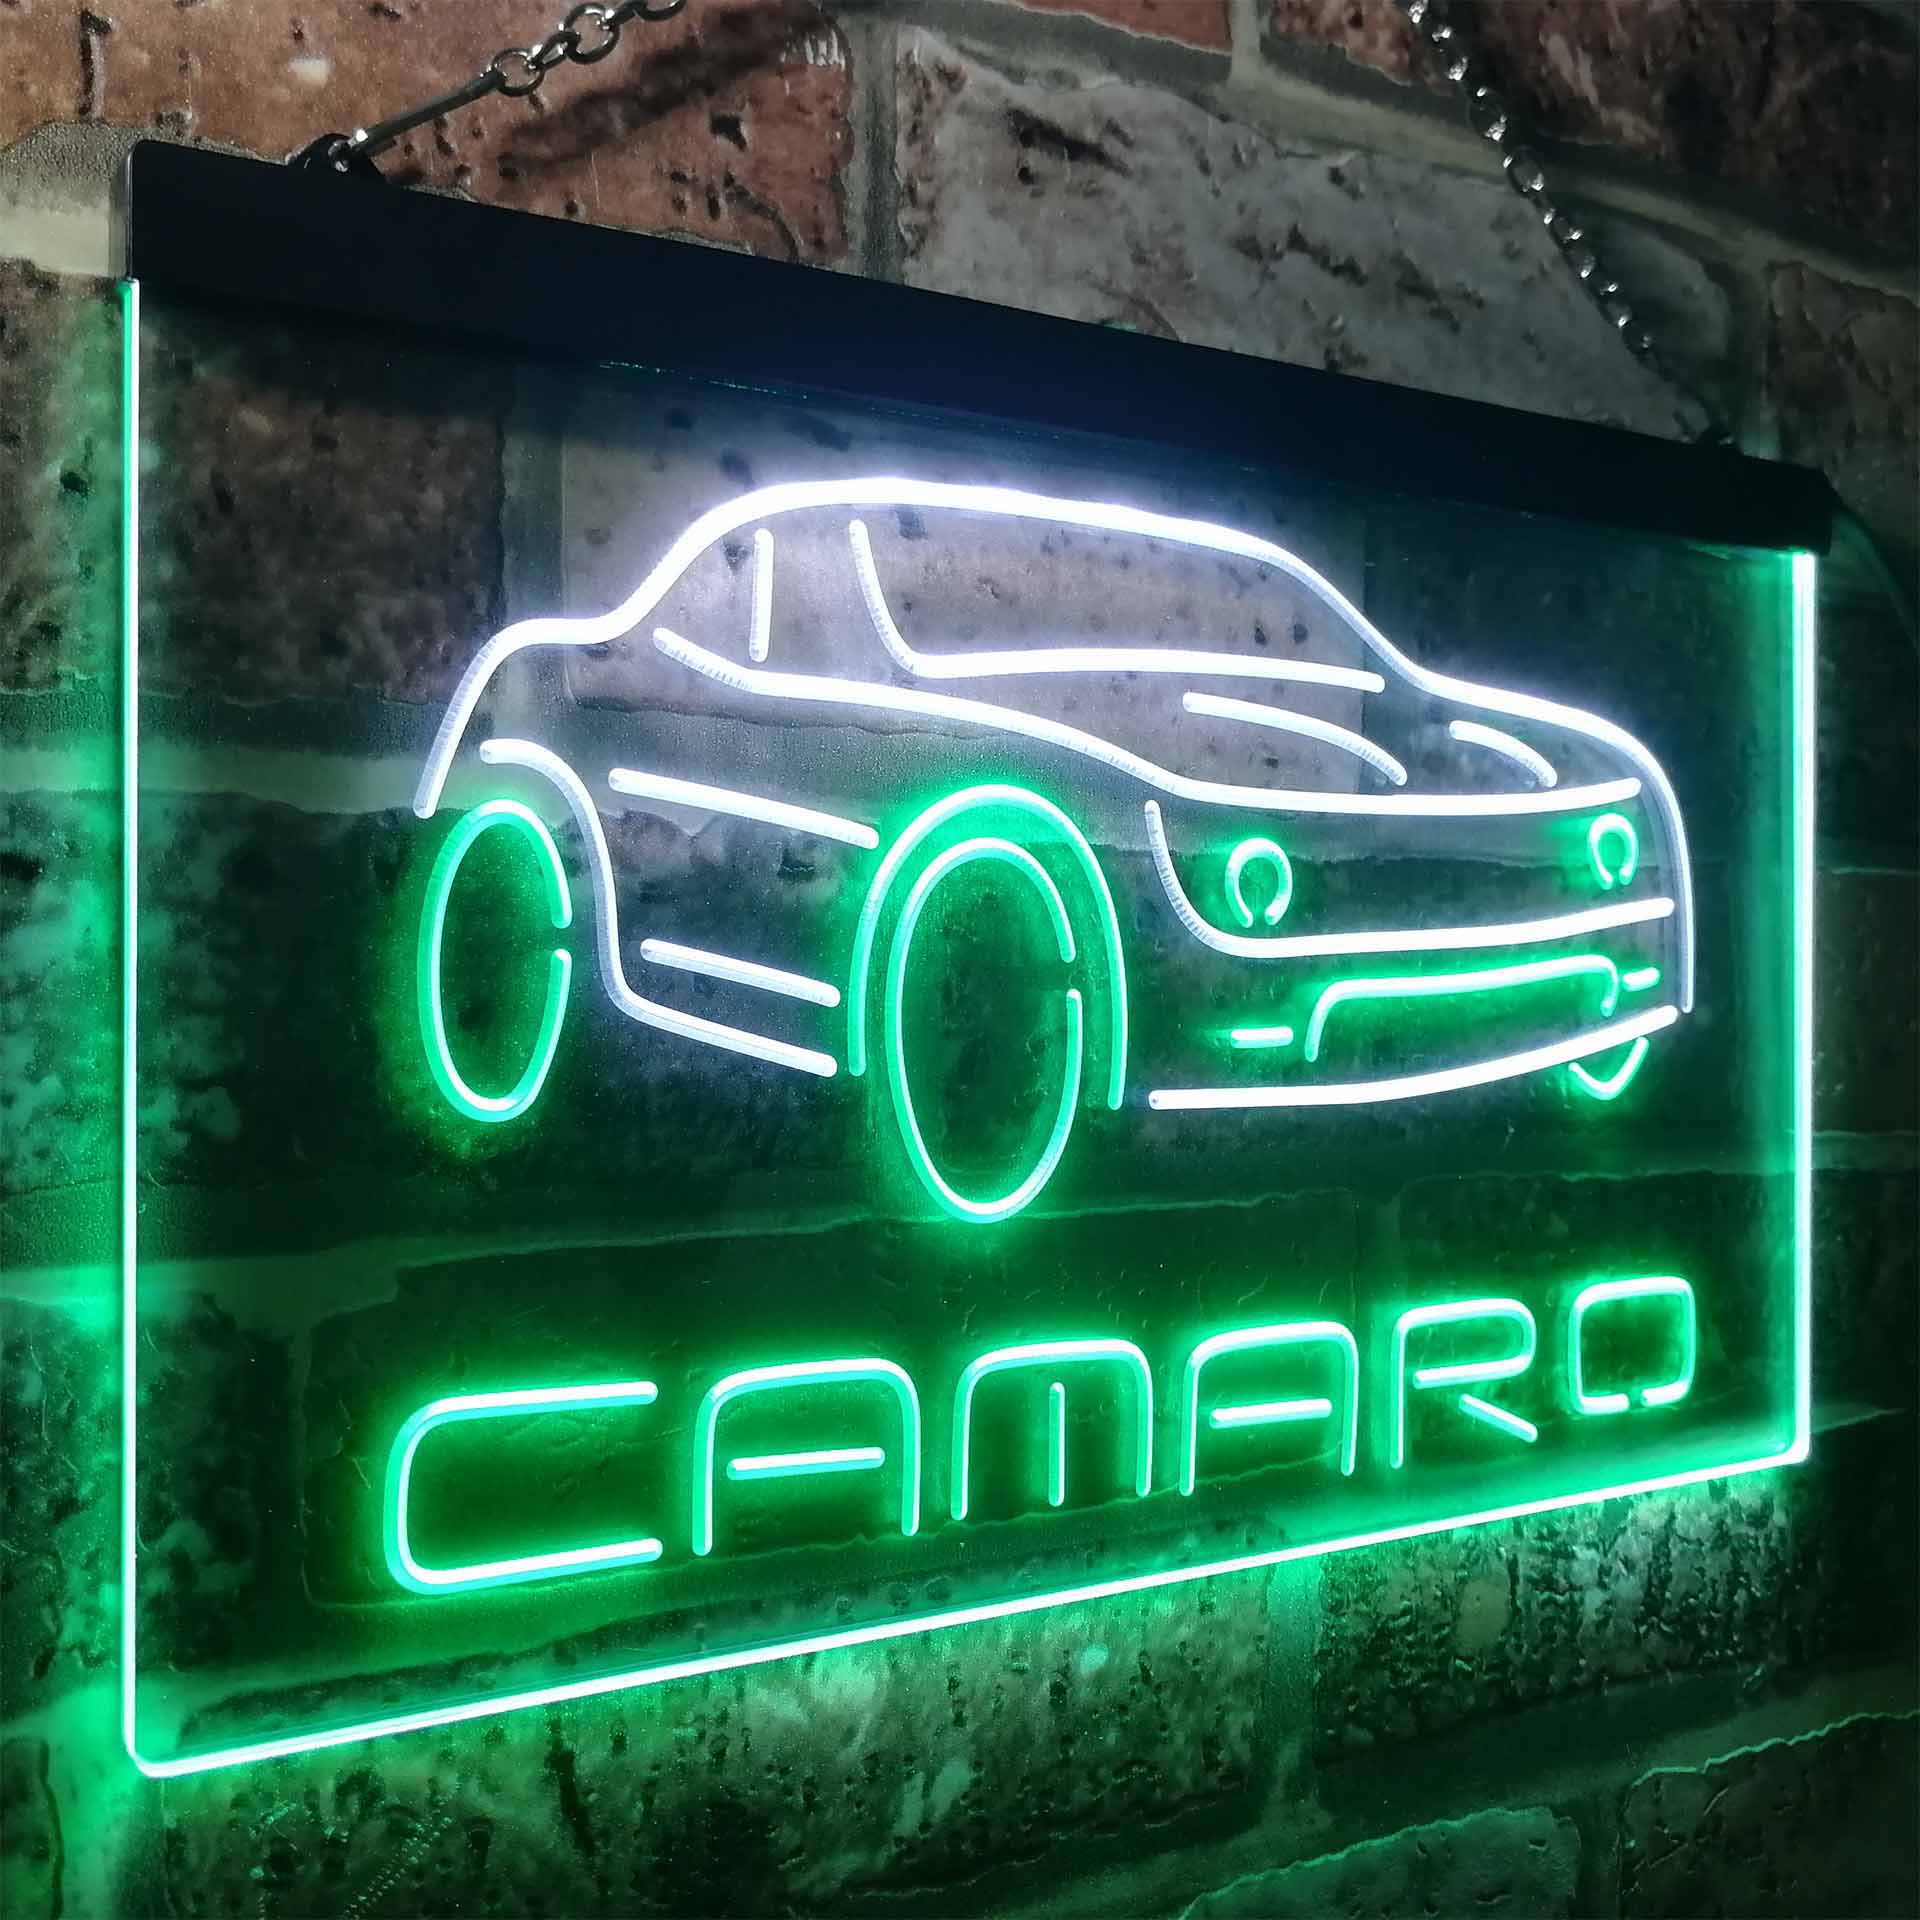 Camaro Chevrolet Car Garage LED Neon Sign